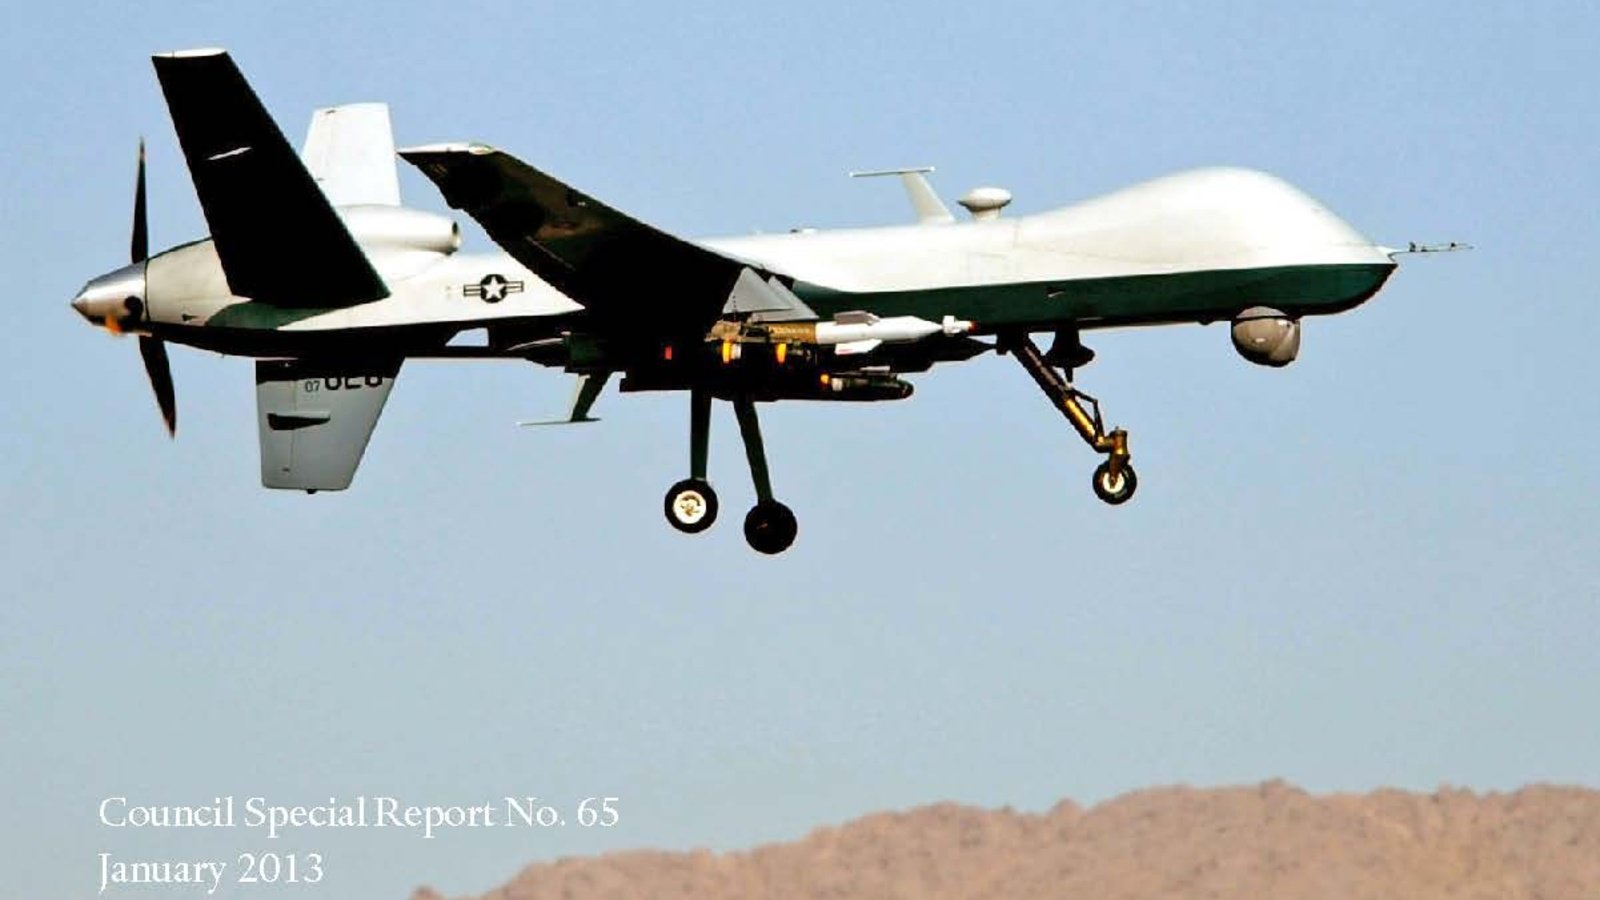 Pro and Con: International Drone Strikes